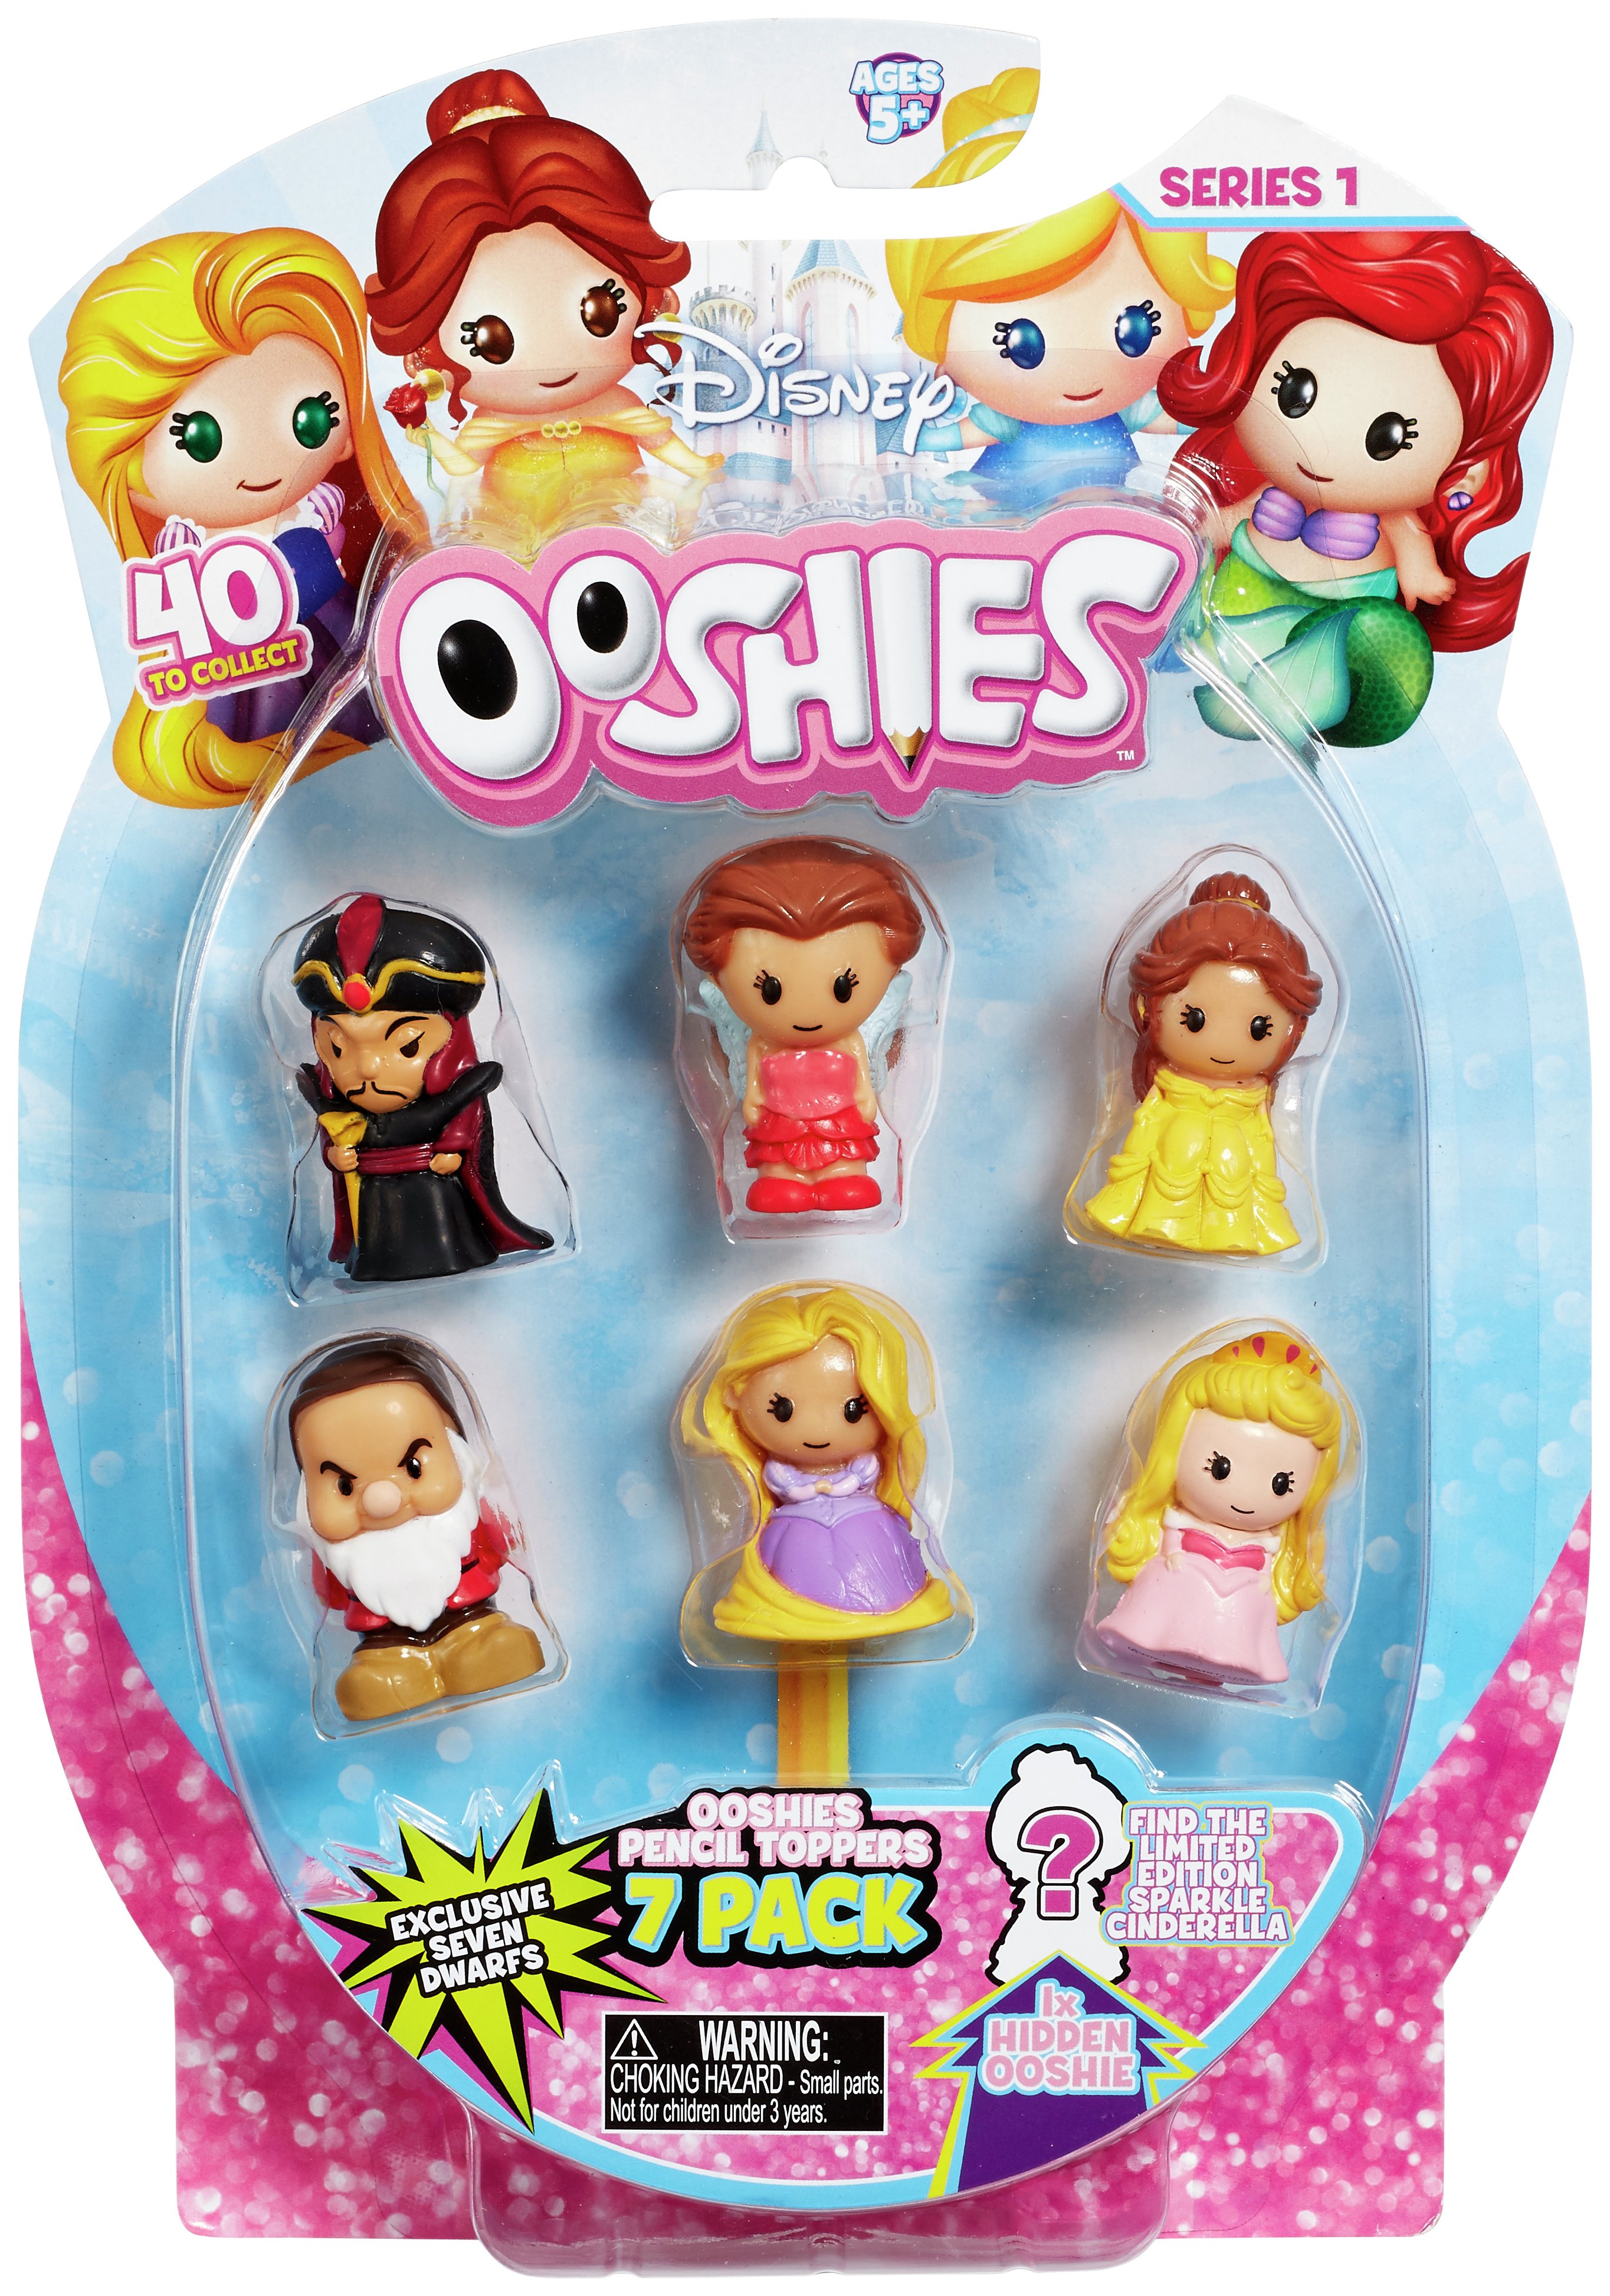 Ooshies Disney Princess Mini Figures.